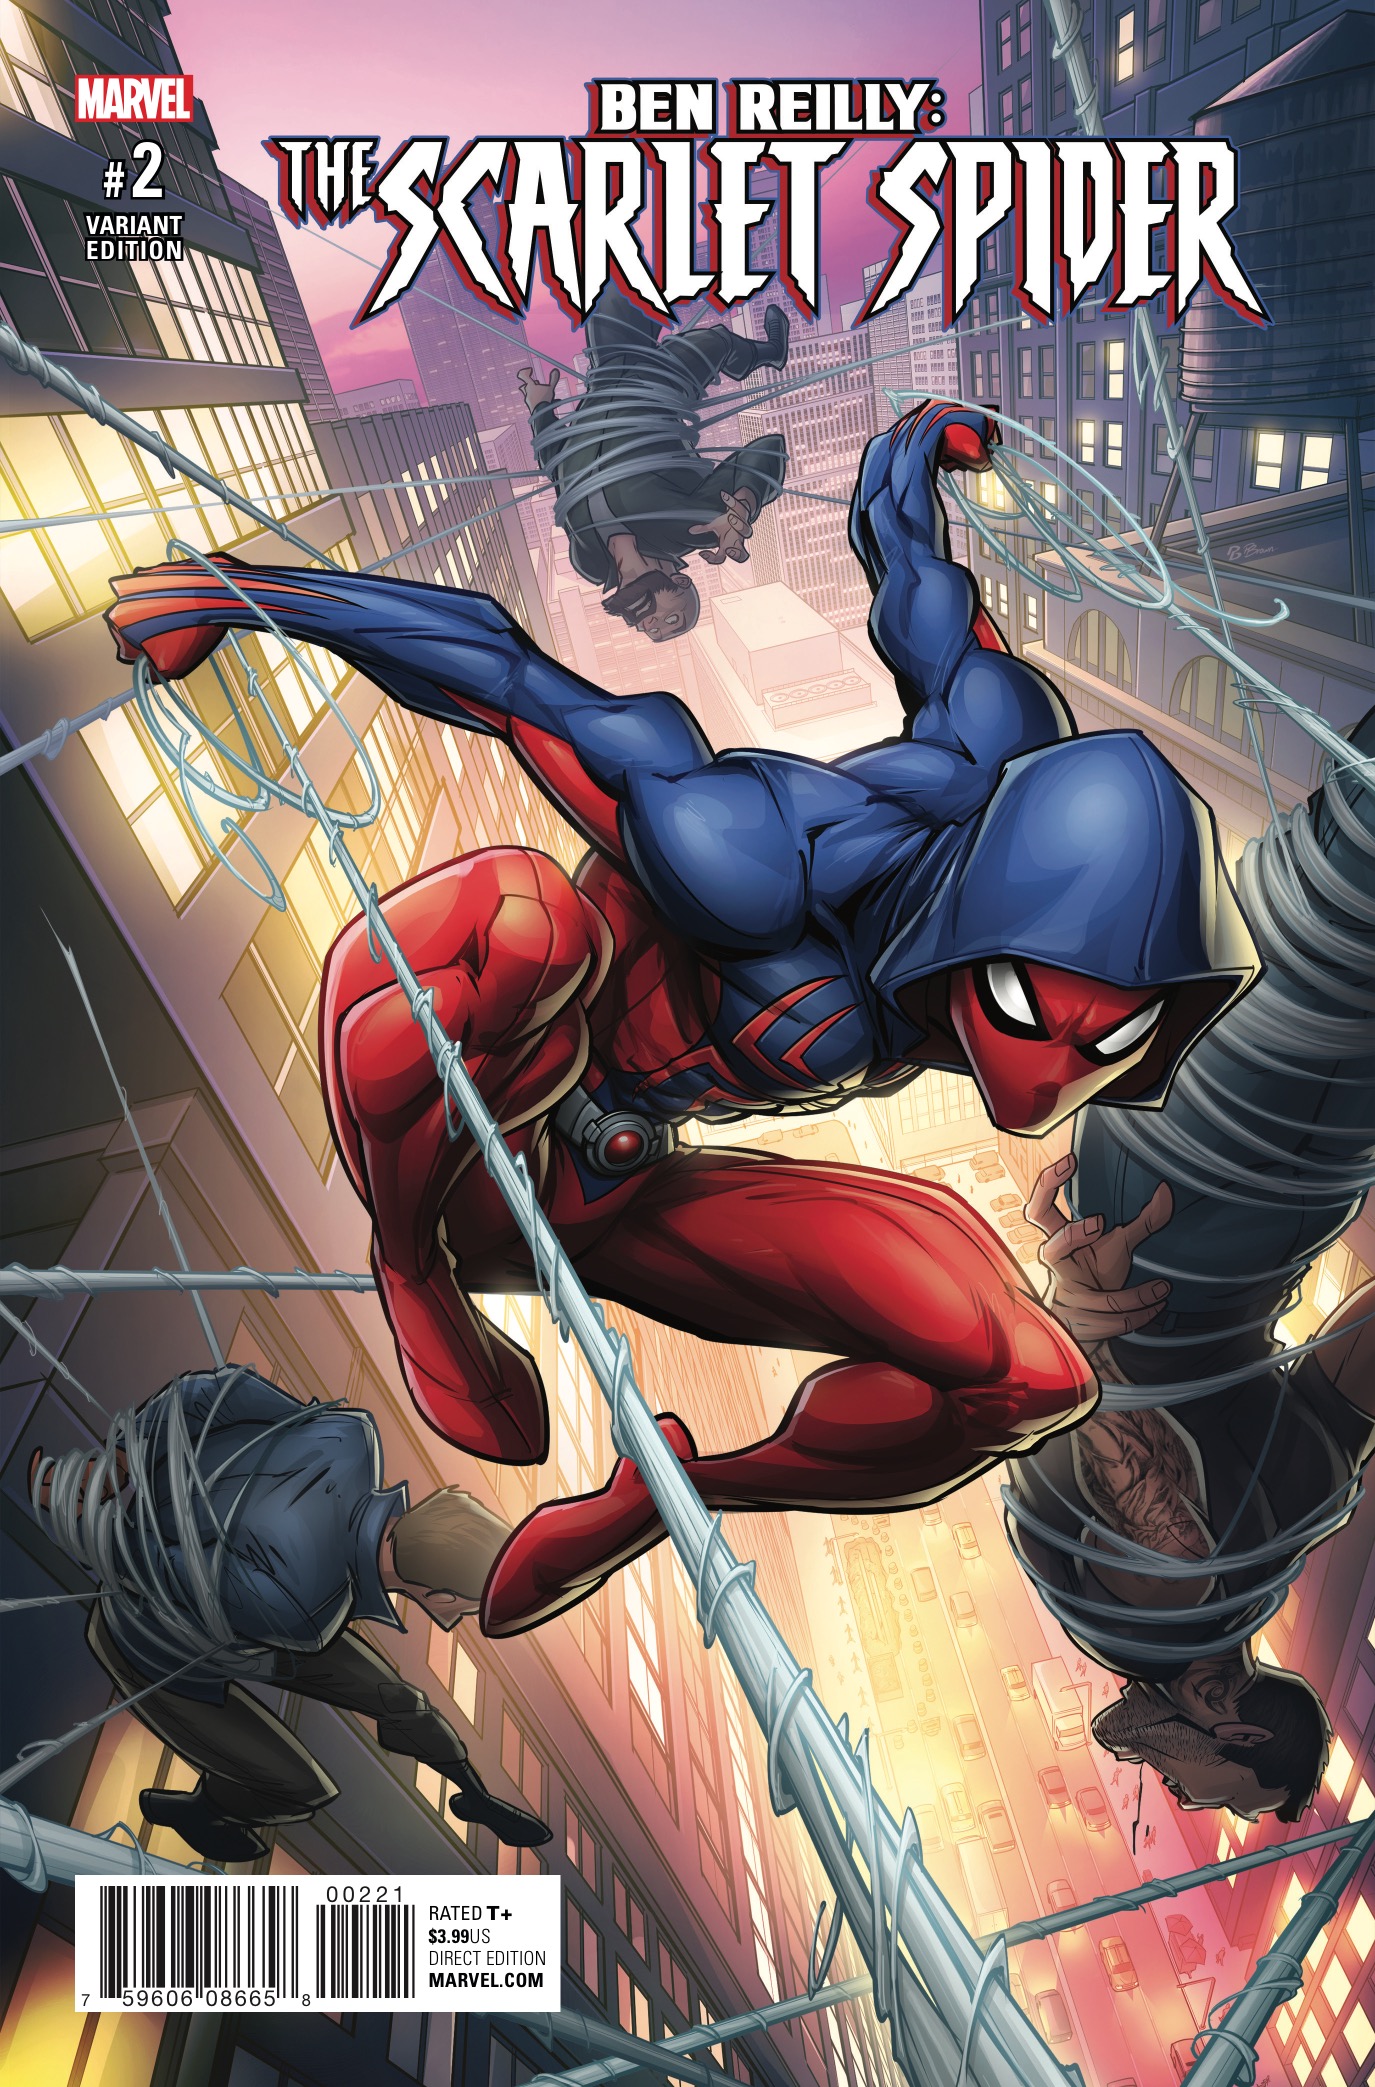 Marvel Preview: Ben Reilly: Scarlet Spider #2